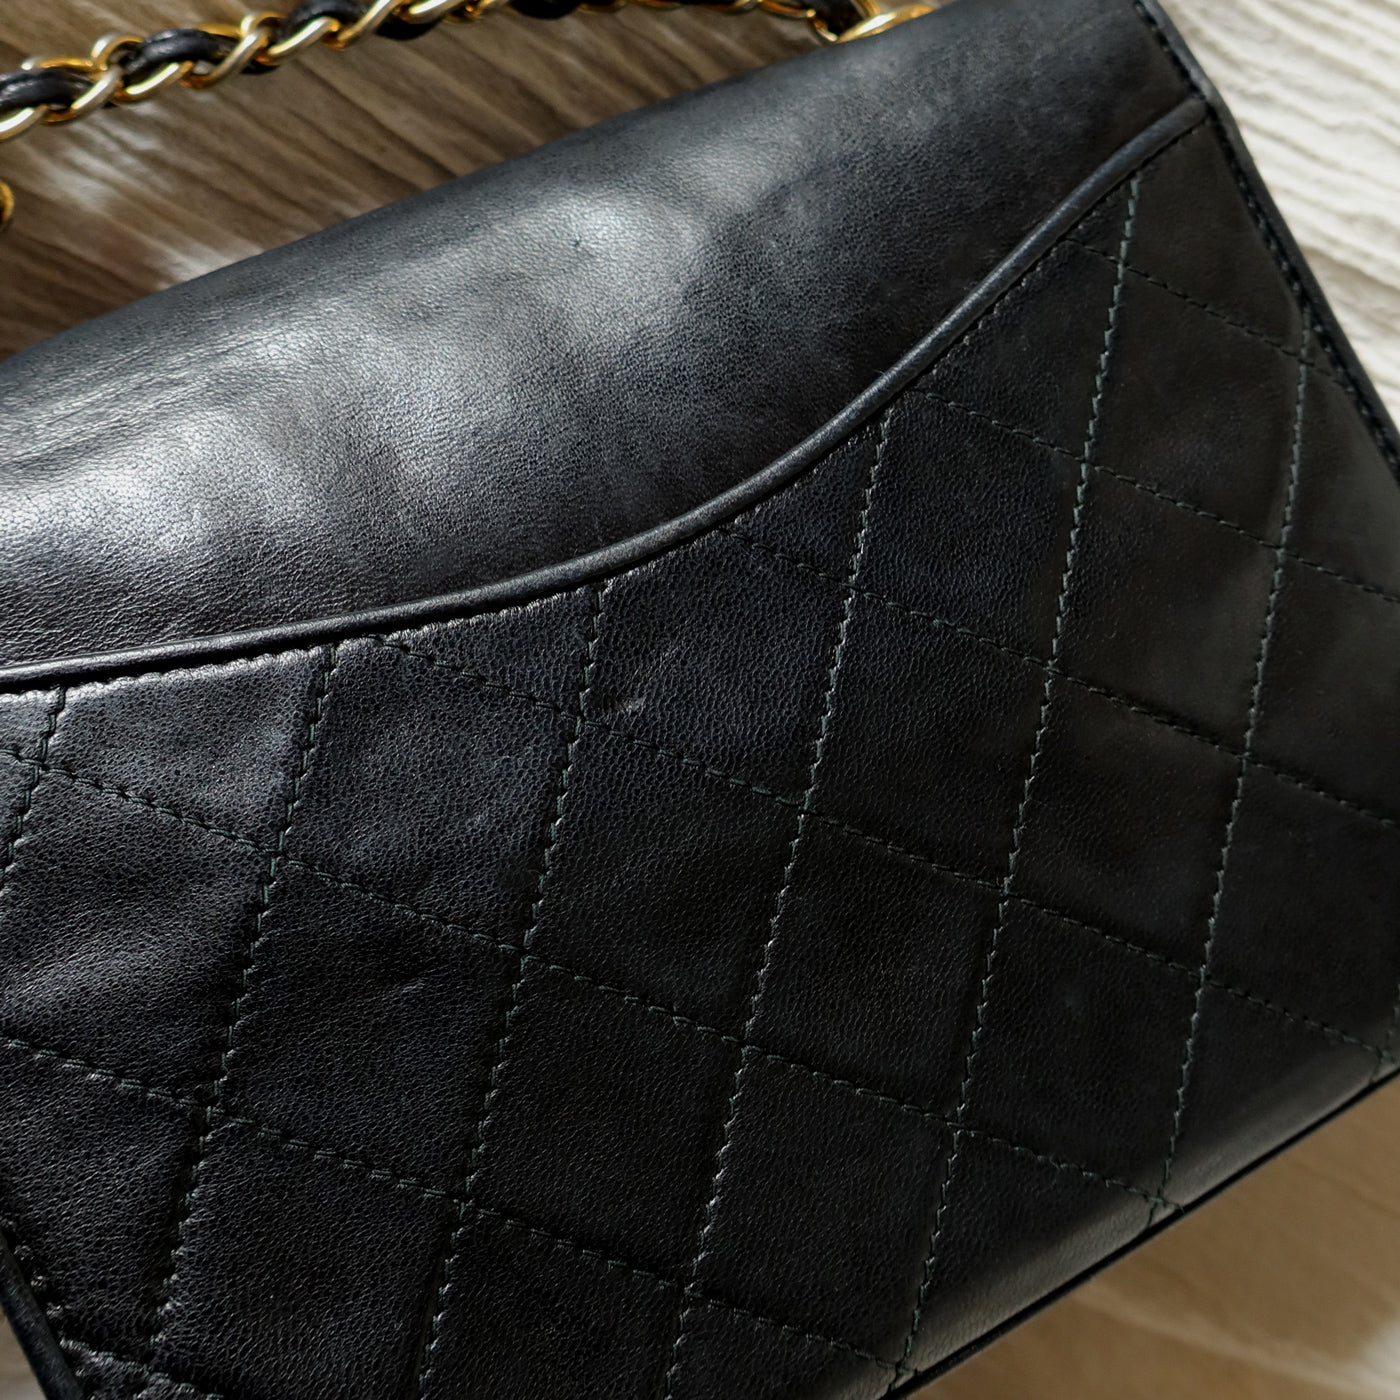 Chanel Vintage Black Lambskin Matelasse Dual Pocket Flap Bag